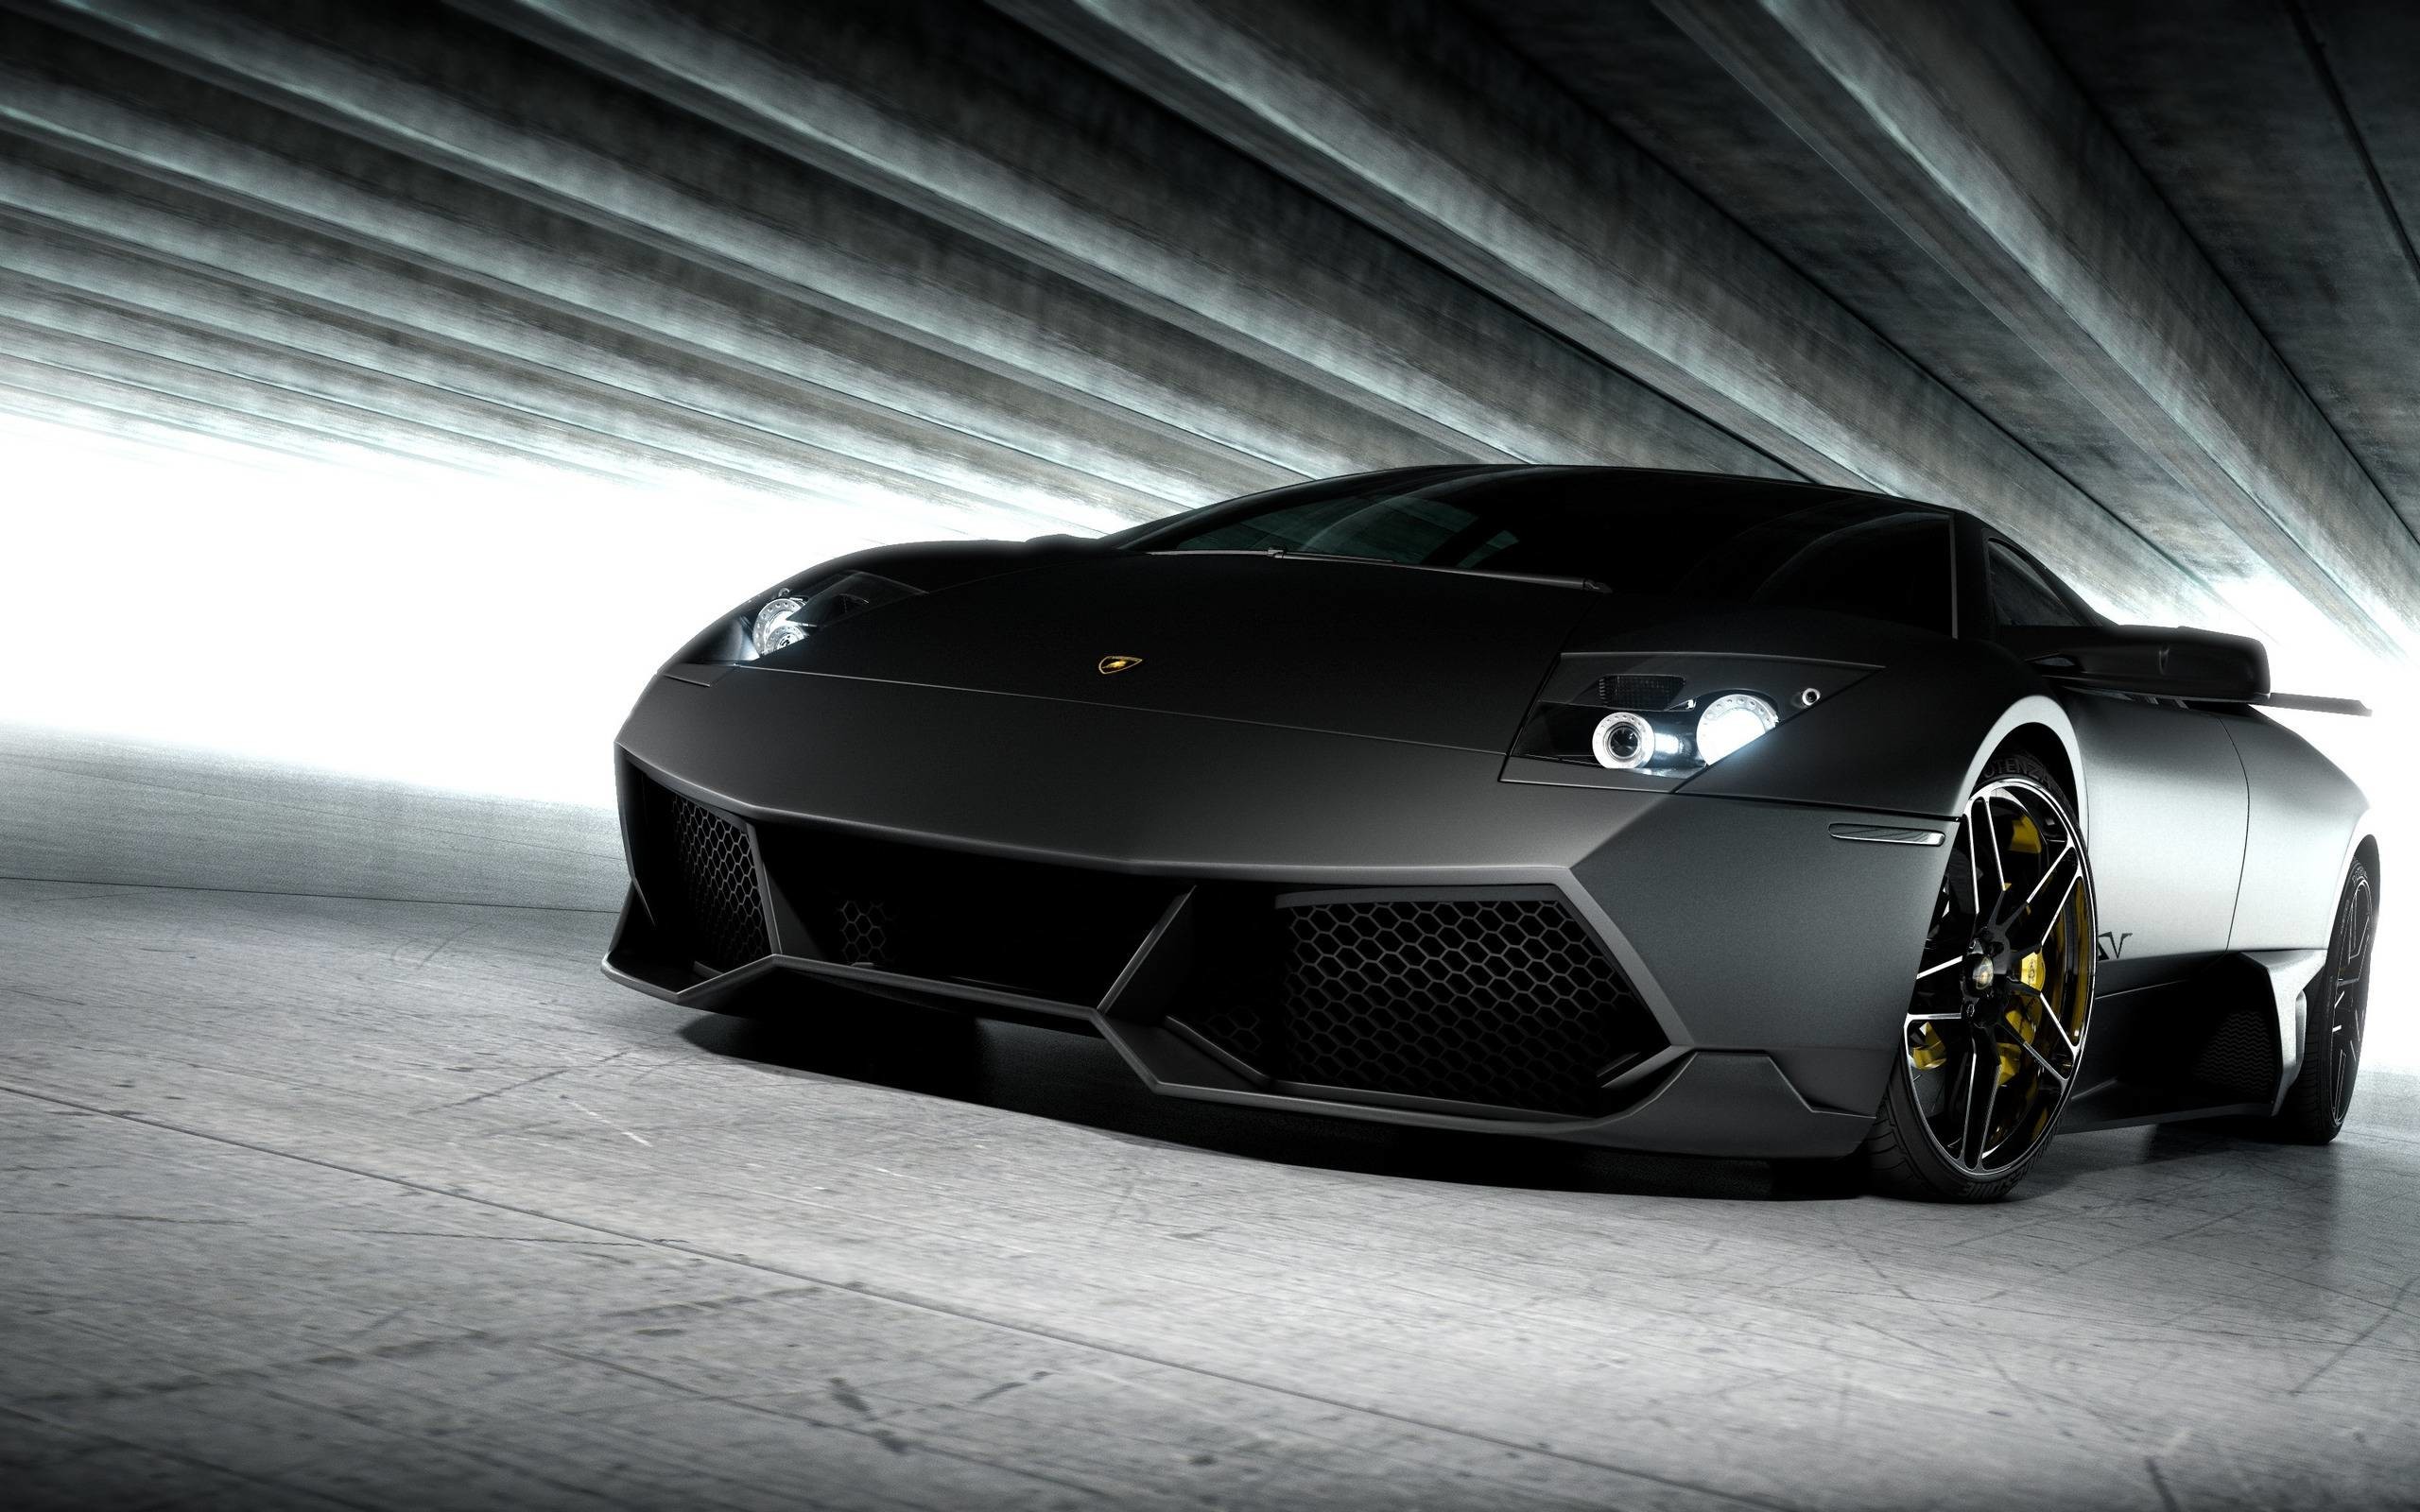 2560x1600 Lamborghini Wallpapers - Full HD wallpaper search